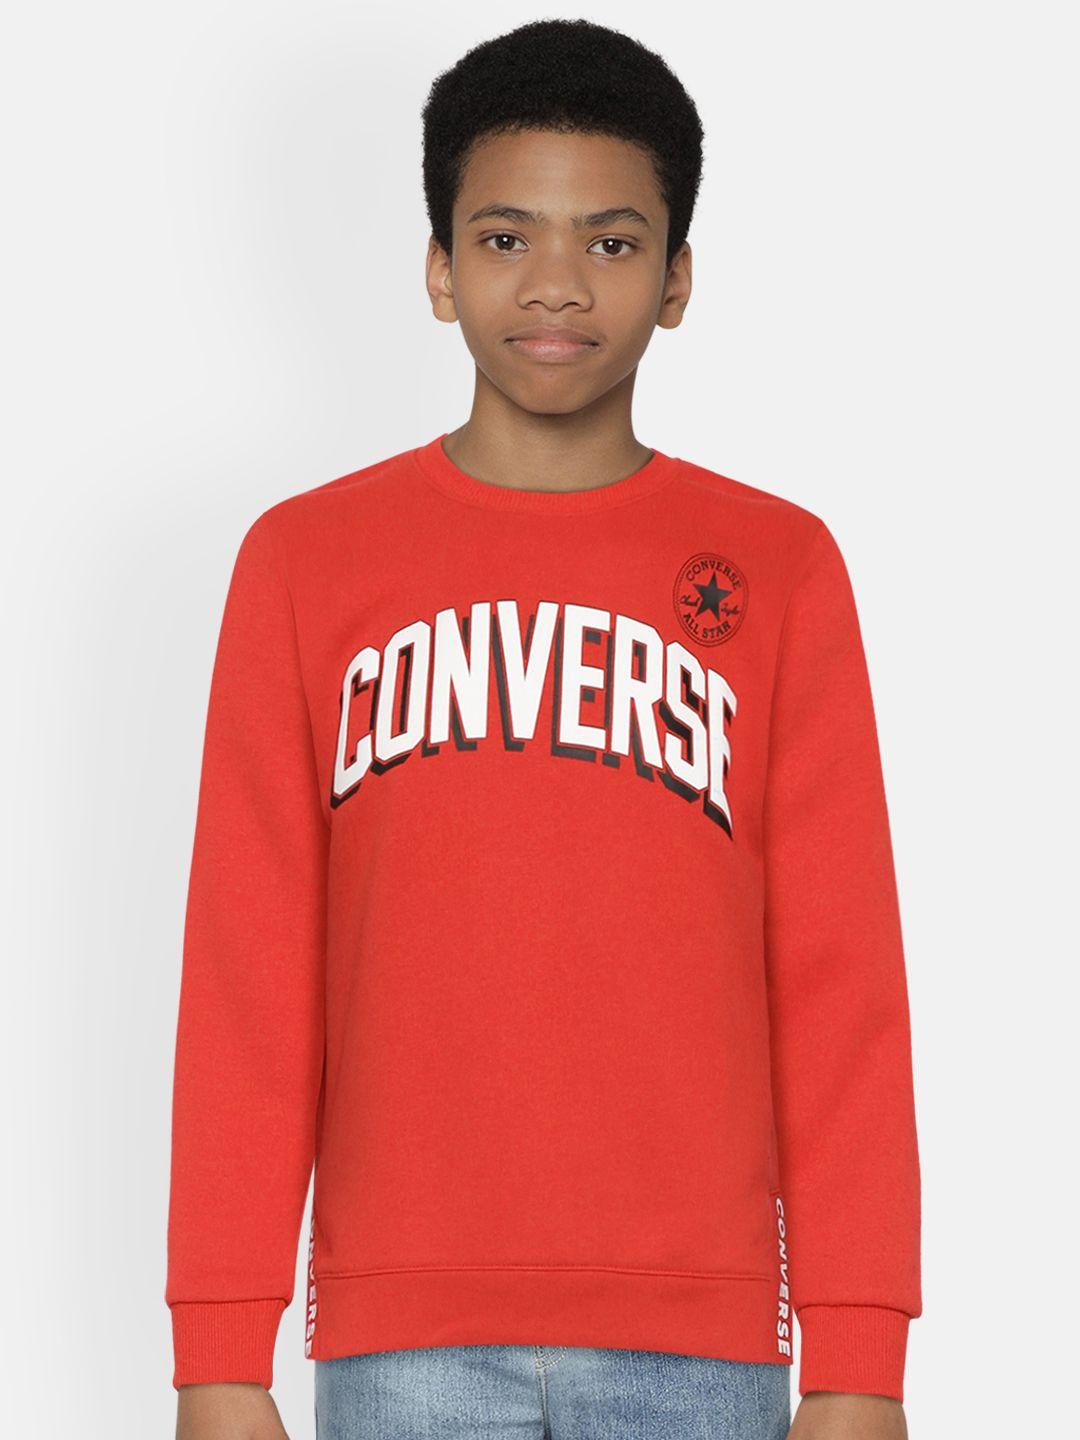 converse boys red & white brand logo print sweatshirt